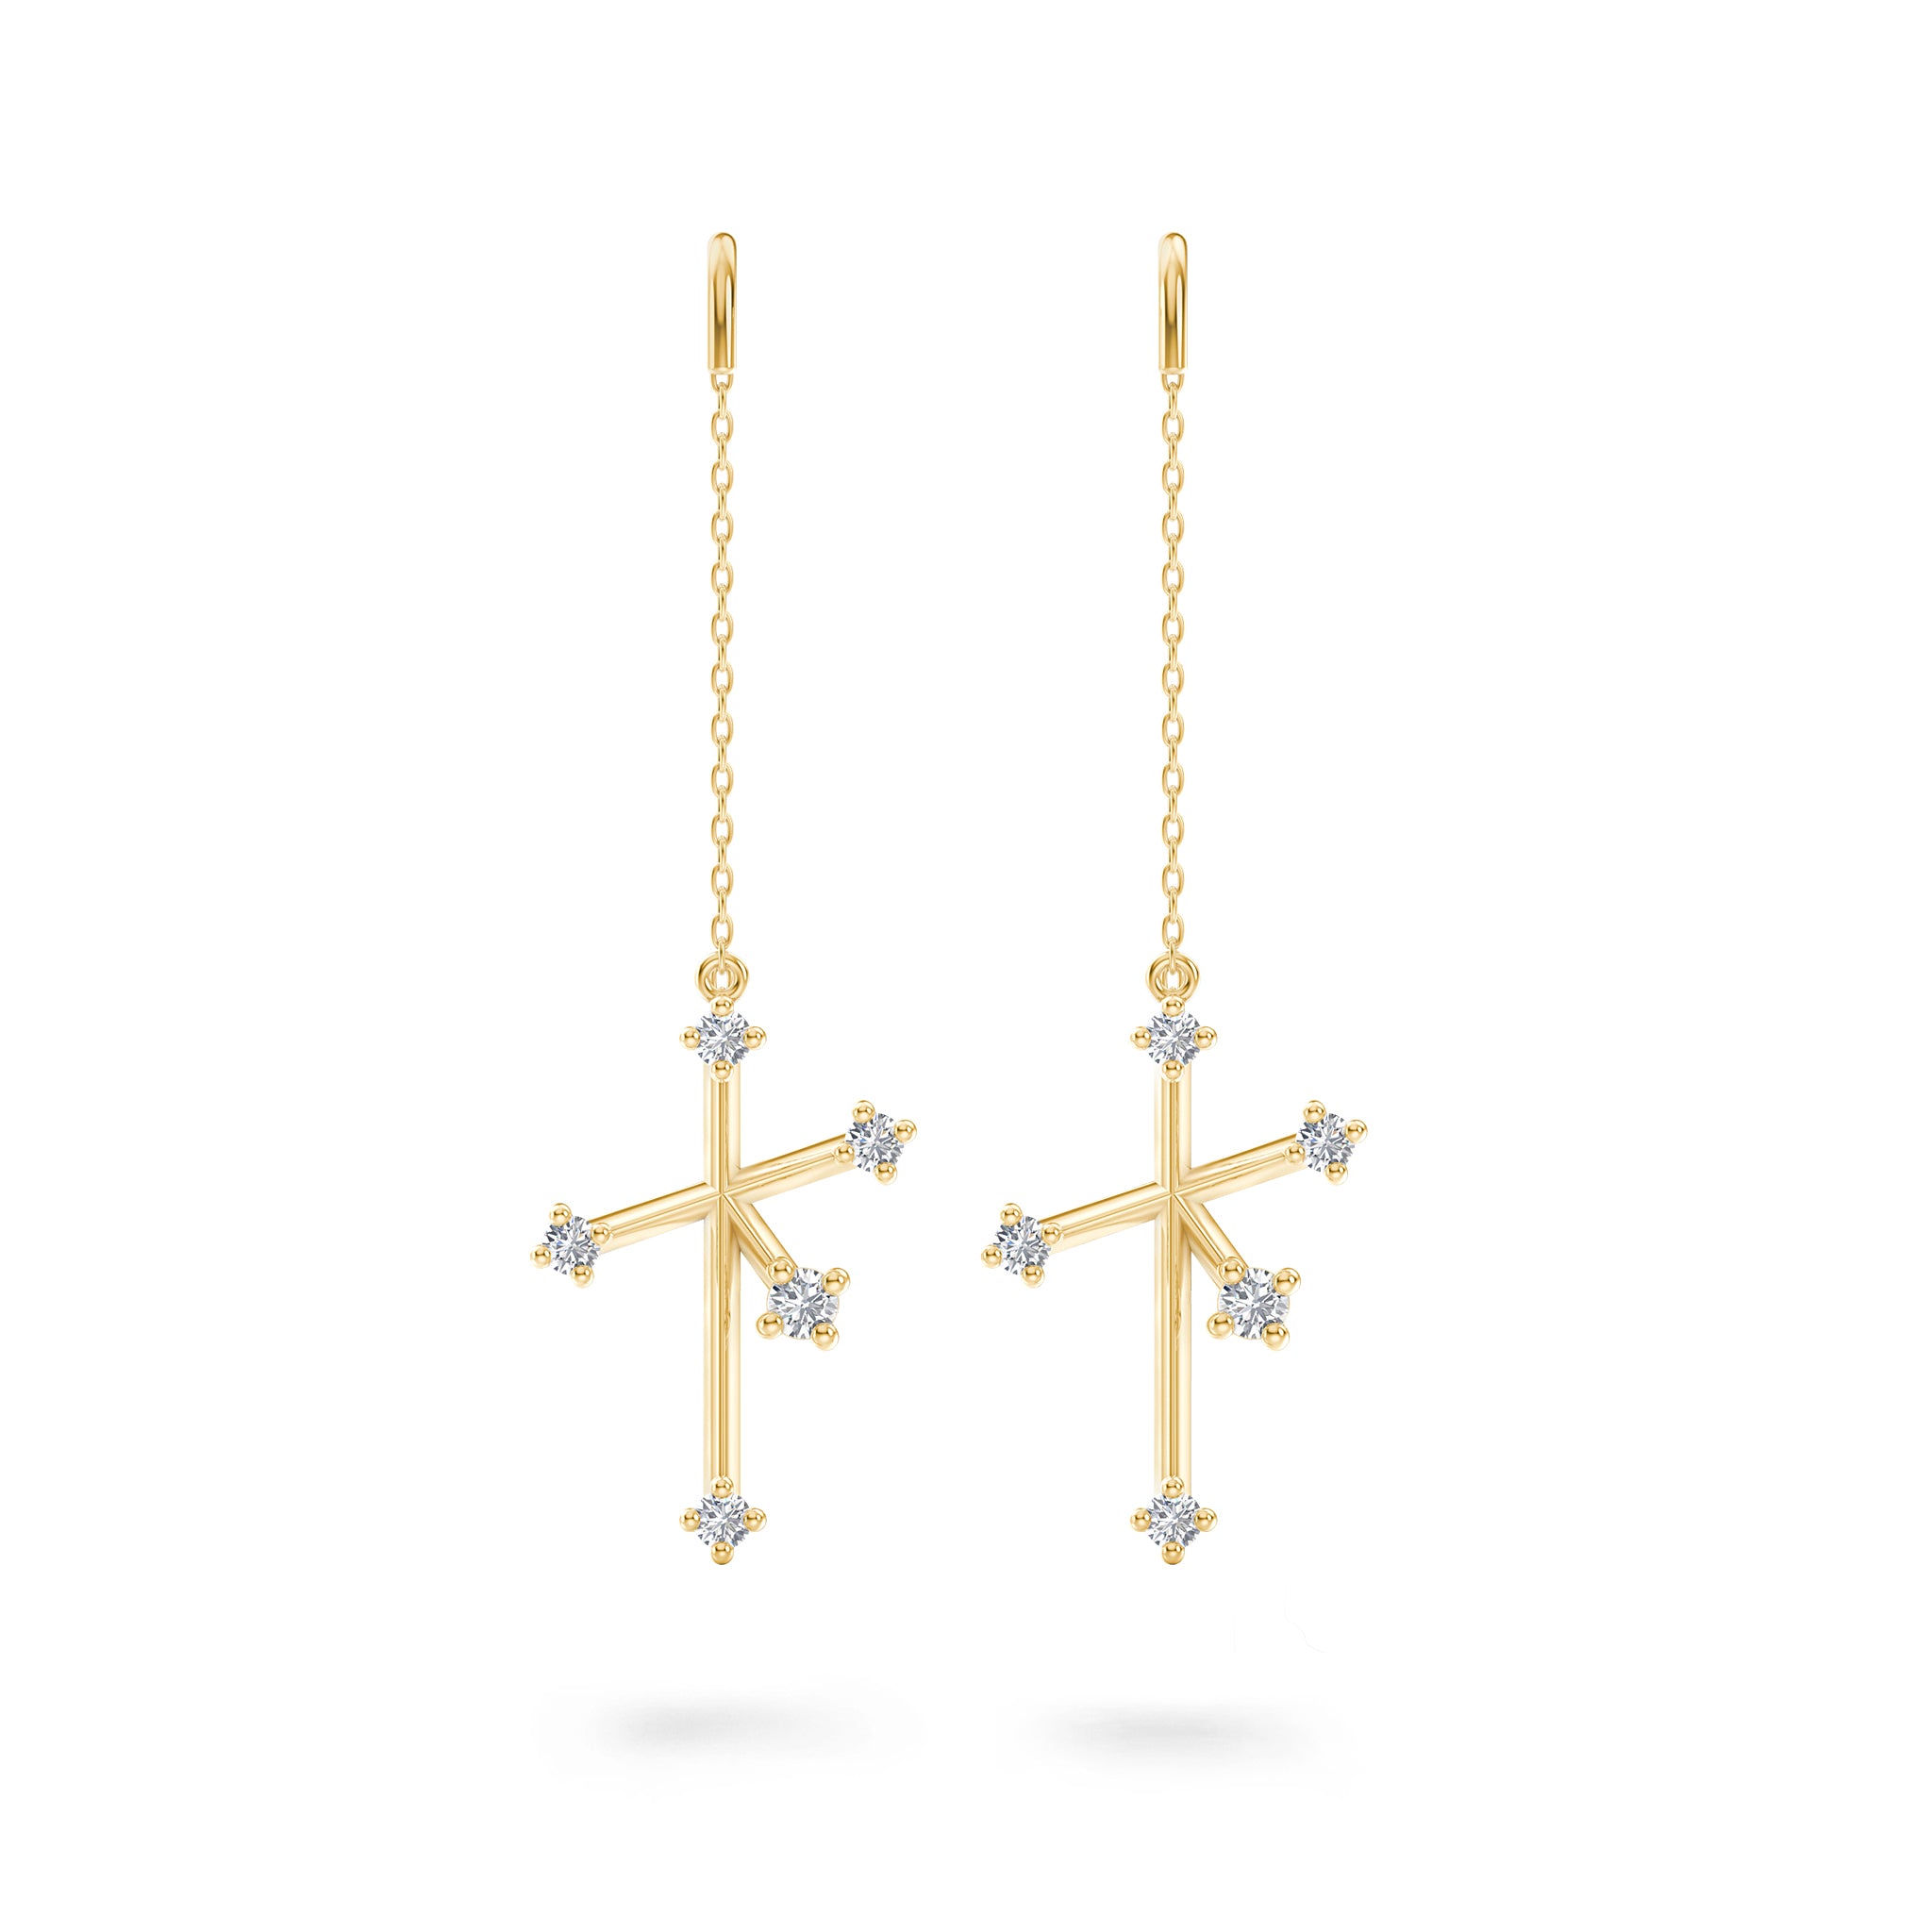 Shimansky - Southern Cross Dangling Diamond Drop Earrings Crafted in 14K Yellow Gold